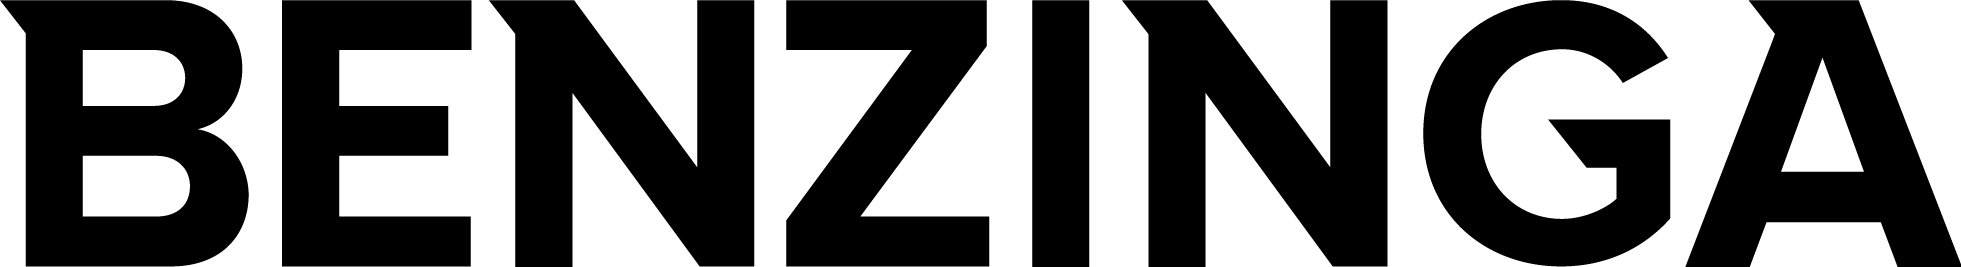 benzinga-logo-black-transparent